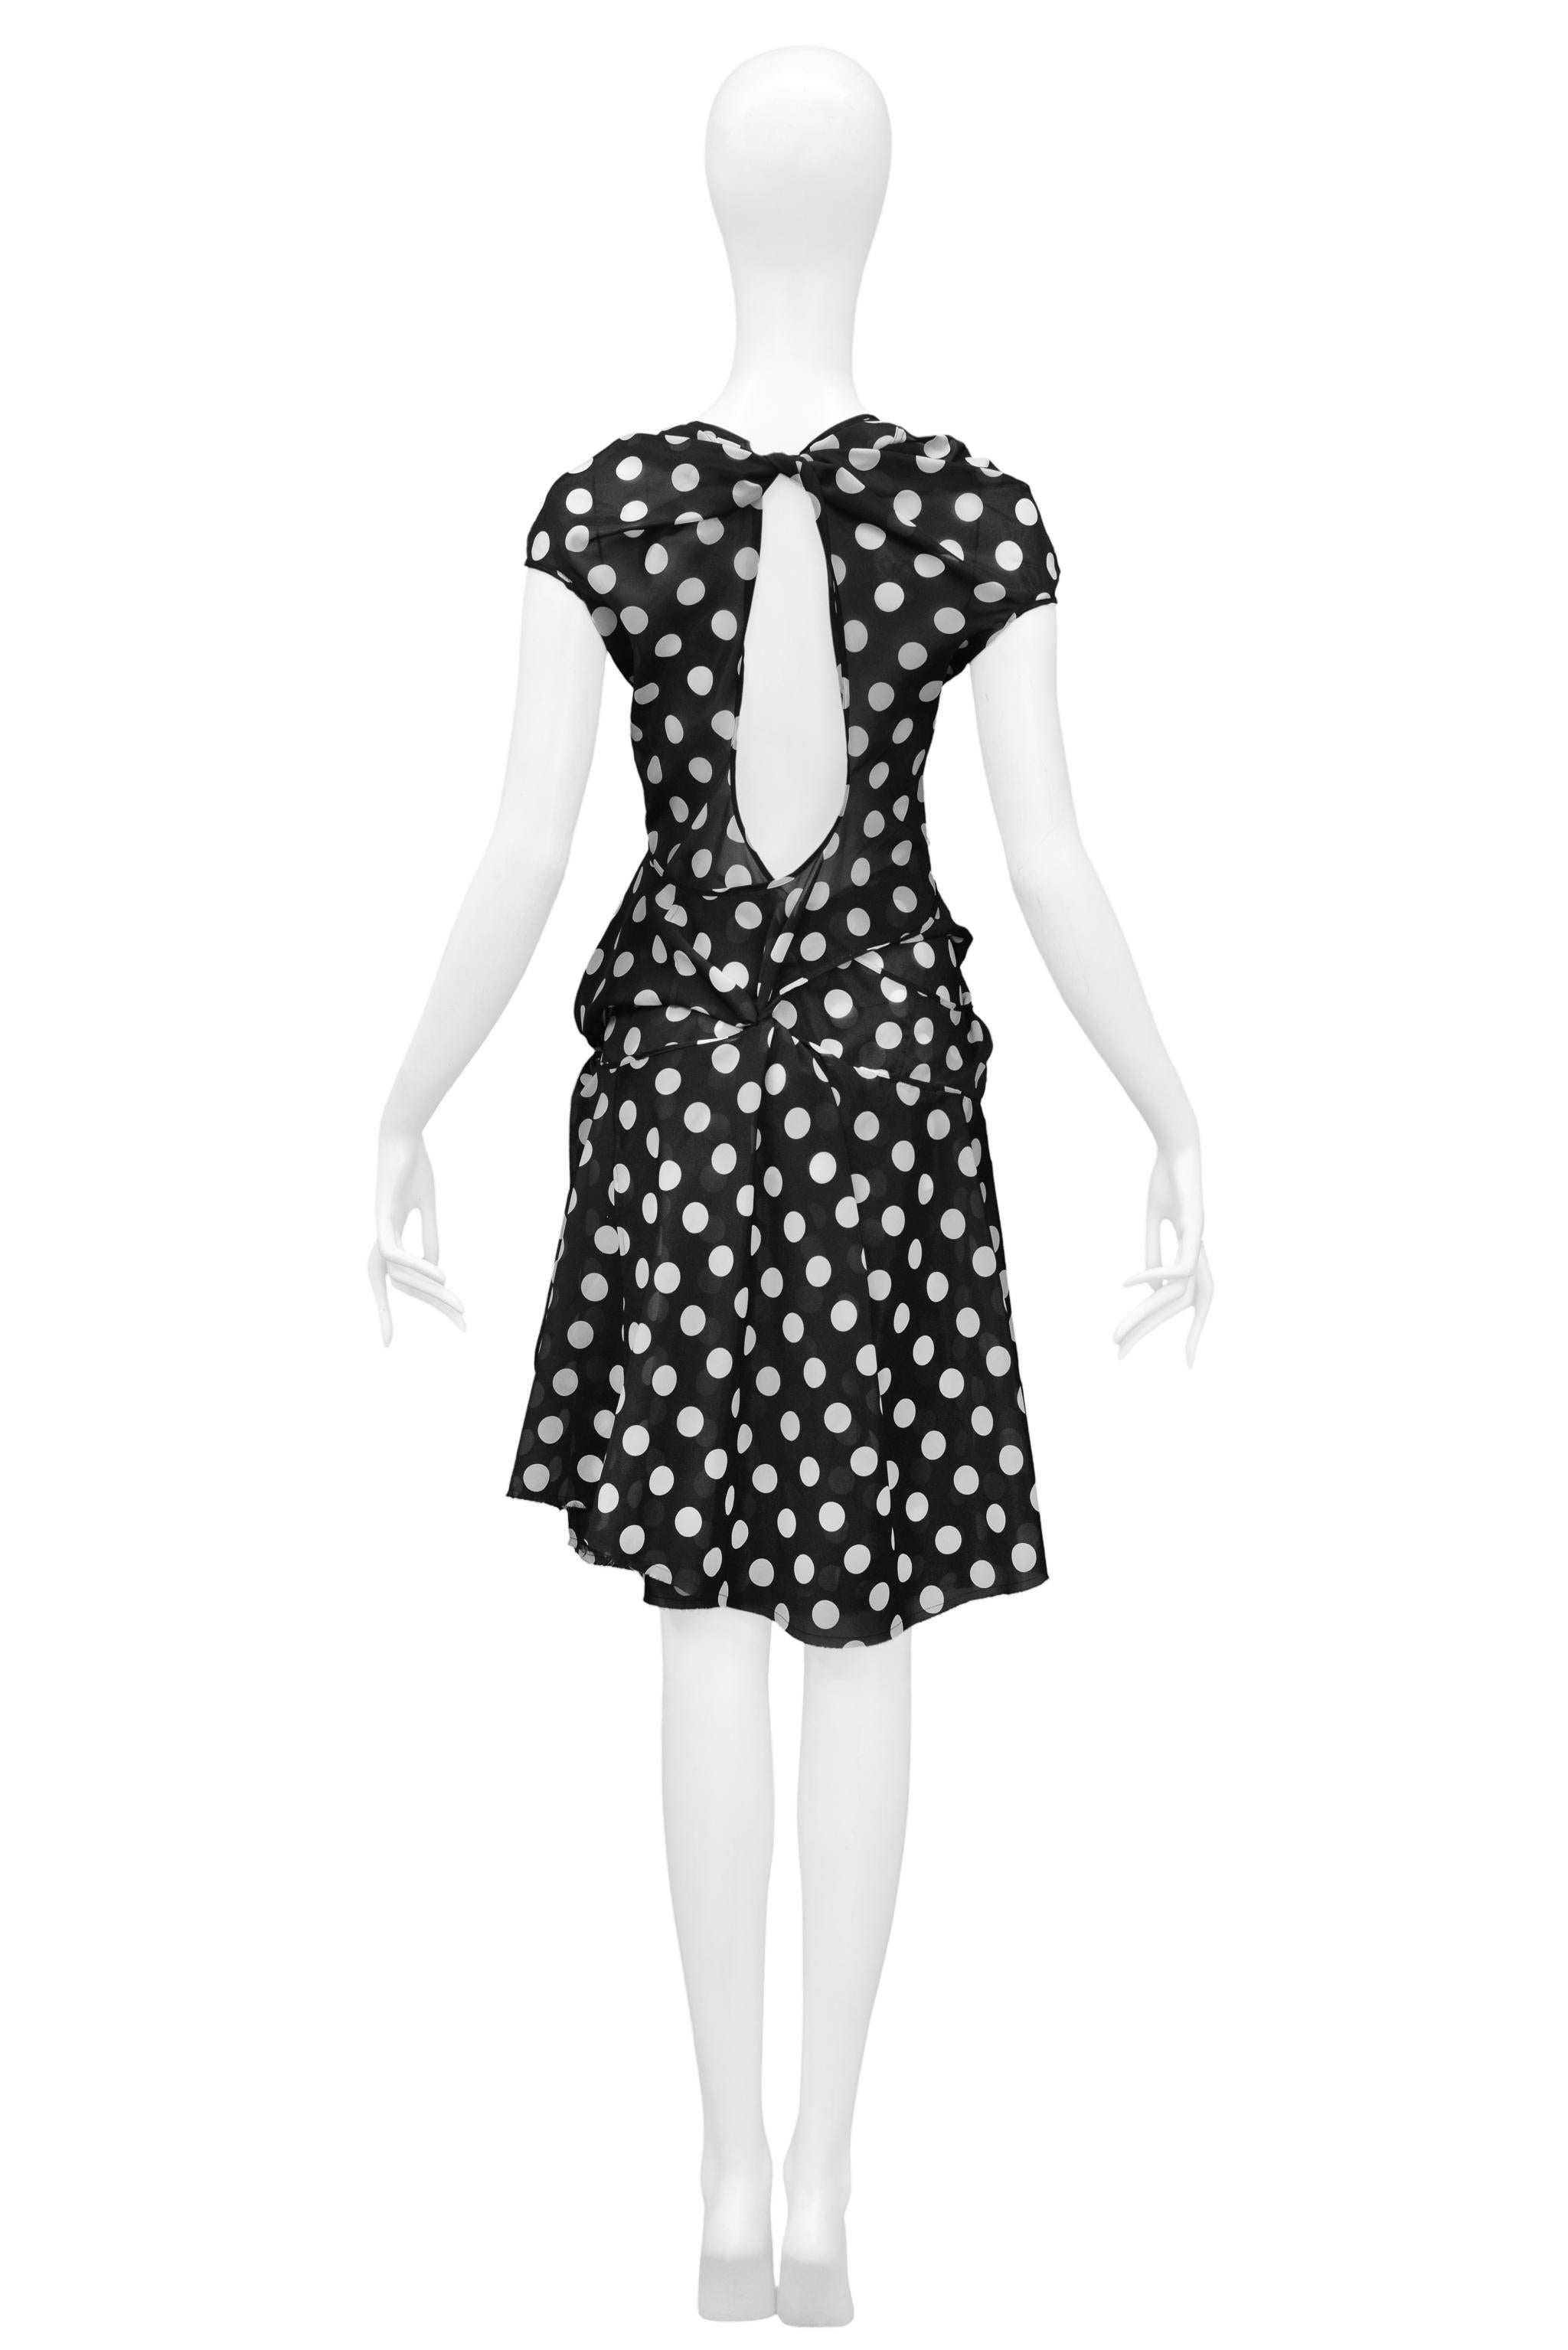 Junya Watanabe Black & White Polka Dot Concept Dress 2004 For Sale 2